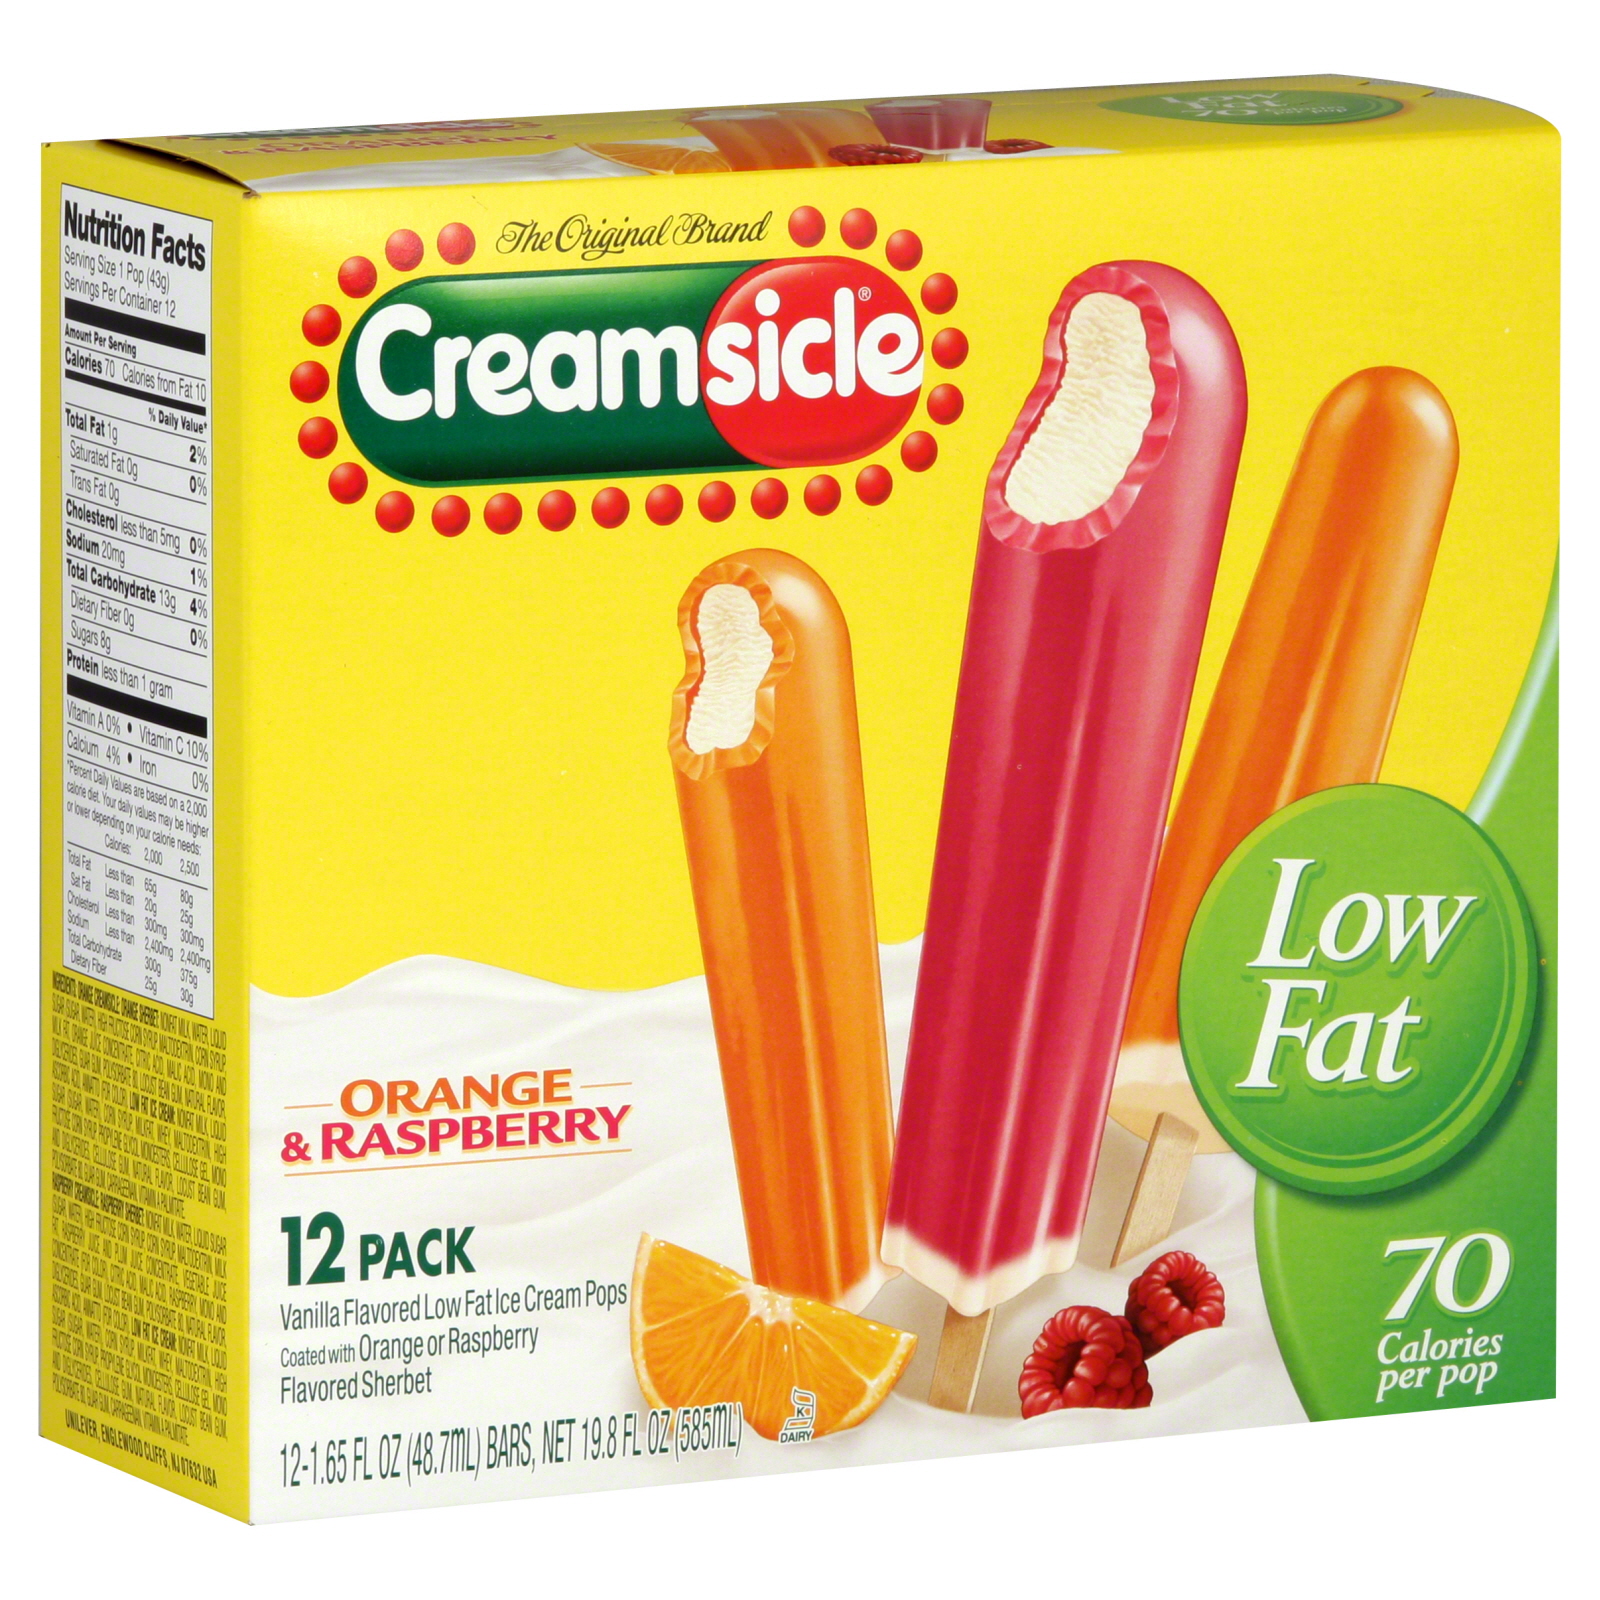 Creamsicle Ice Cream Pop, Orange & Raspberry Sherbet, 12 - 1.65 fl oz (48.7ml) bars [19.8 fl oz (585ml)]